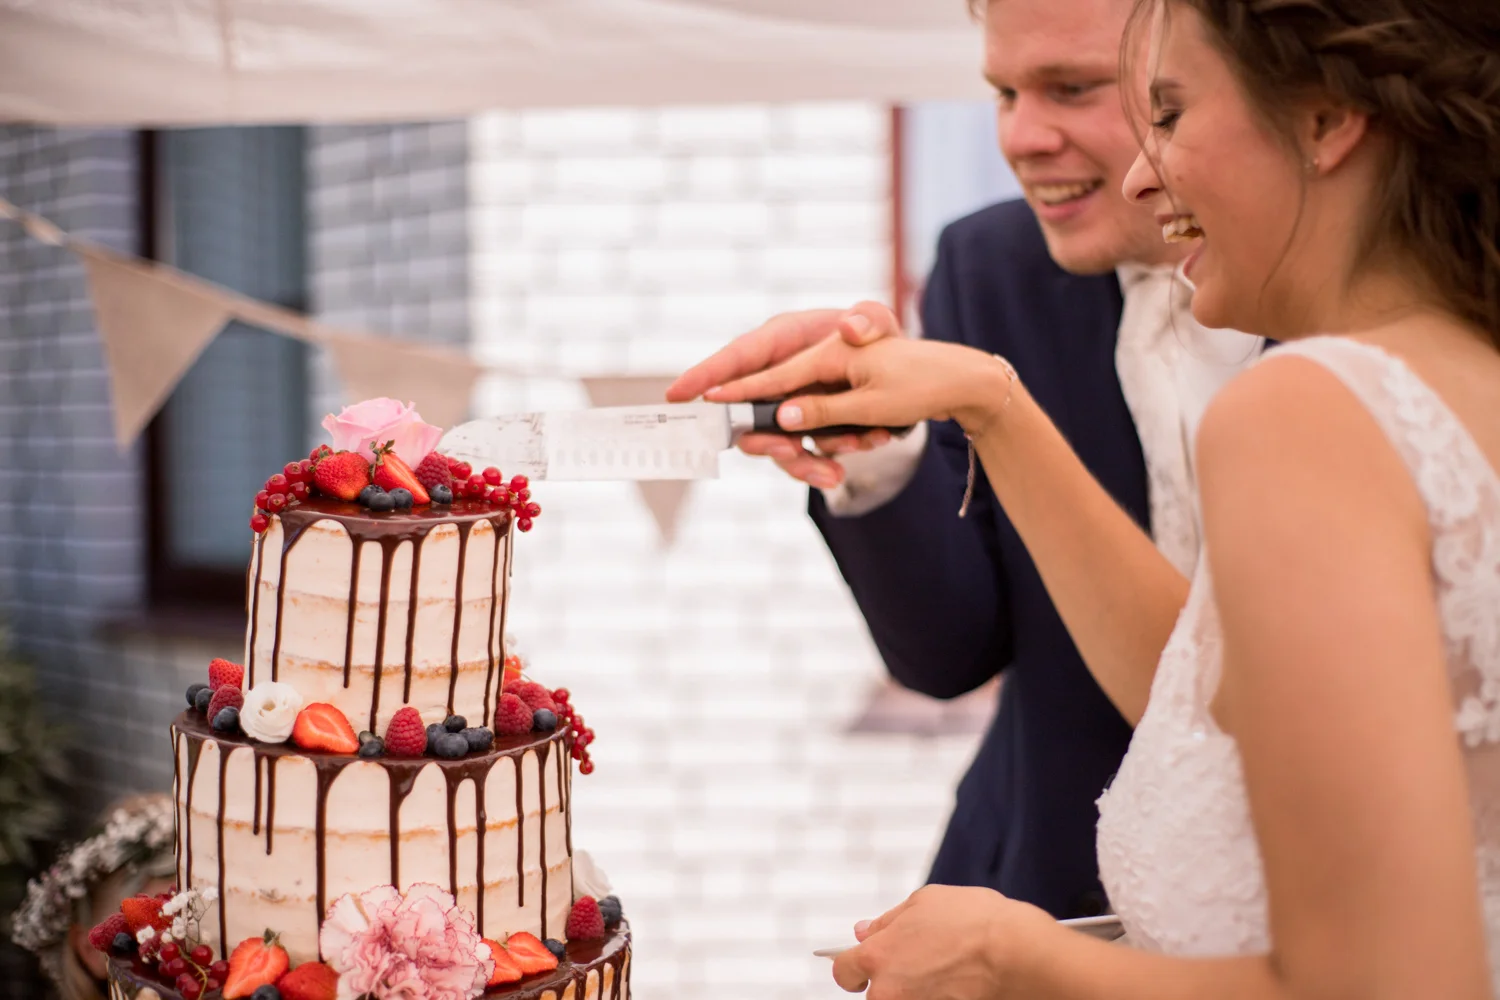 Vintage-Wedding-Cake-with-Chocolate-Drip-coucoucake